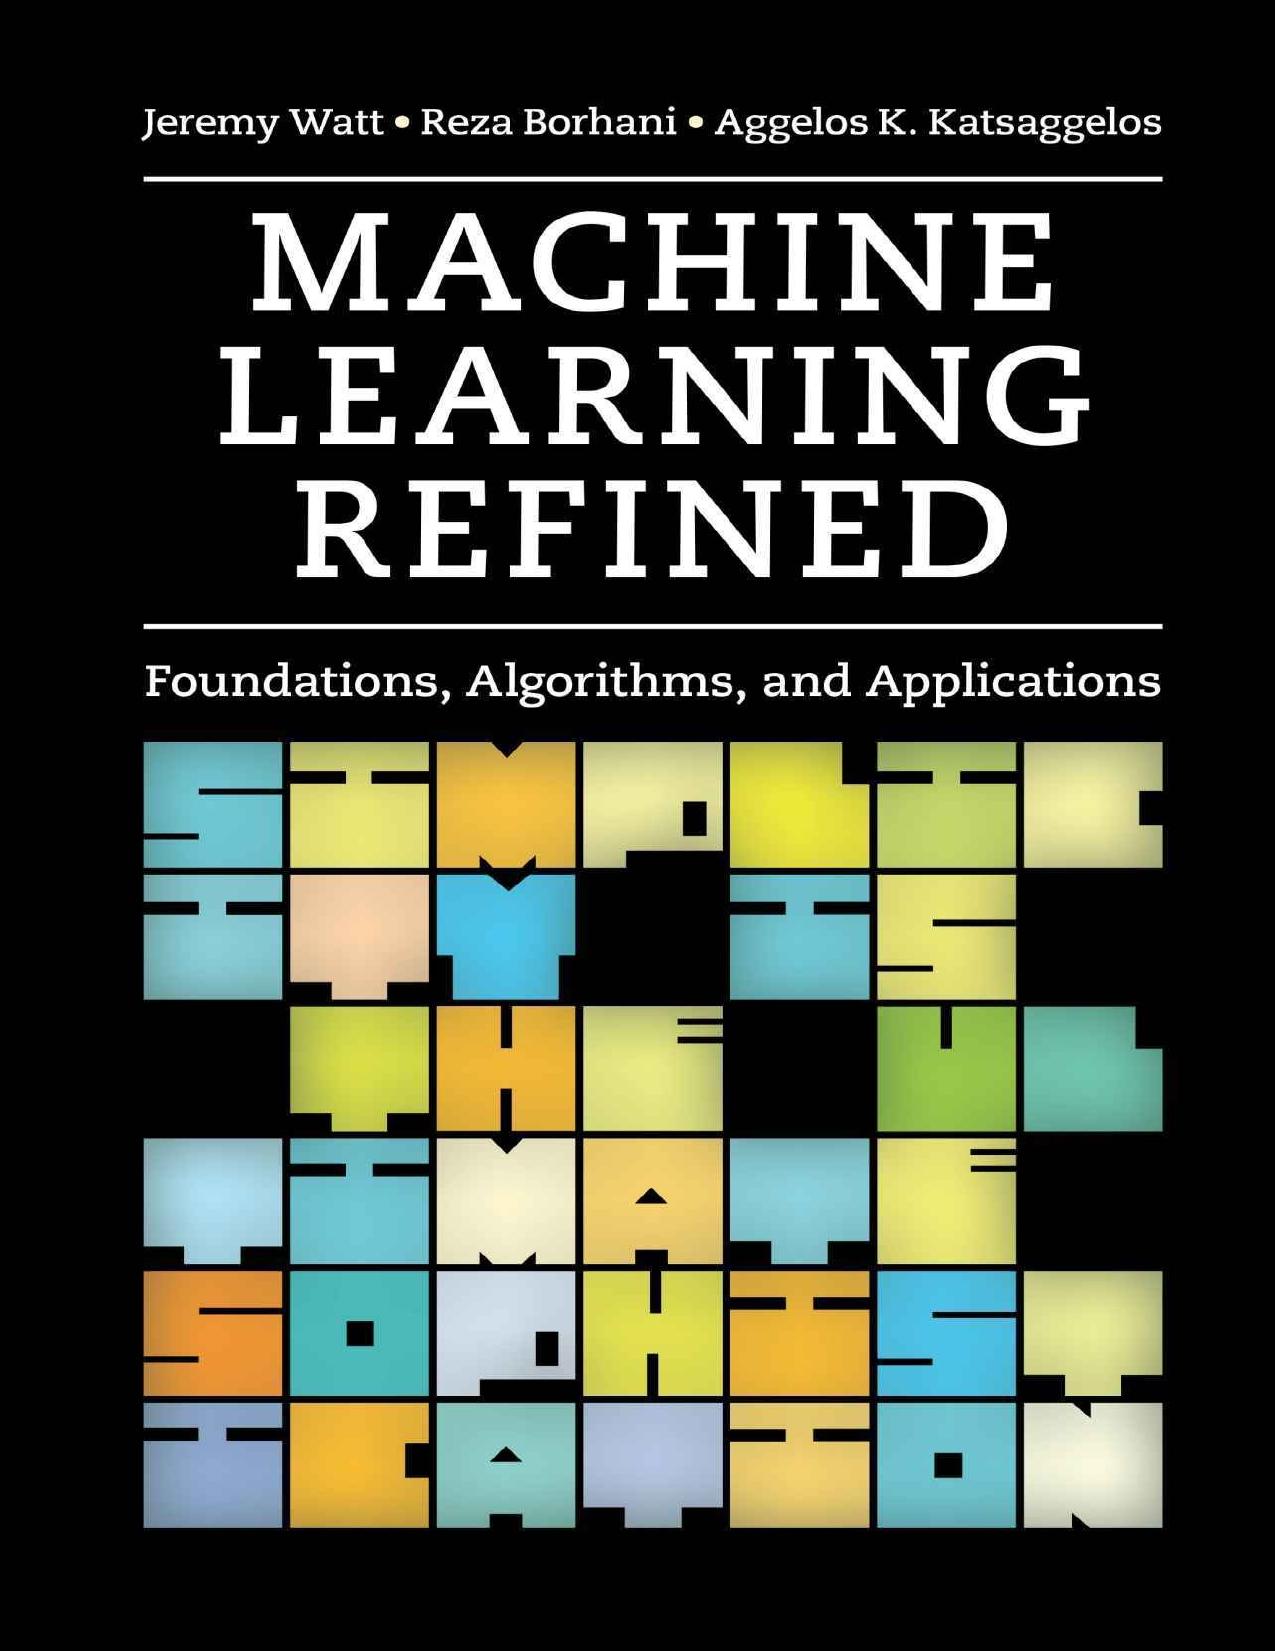 Machine Learning Refined: Foundations, Algorithms, and Applications by Jeremy Watt & Reza Borhani & Aggelos Katsaggelos